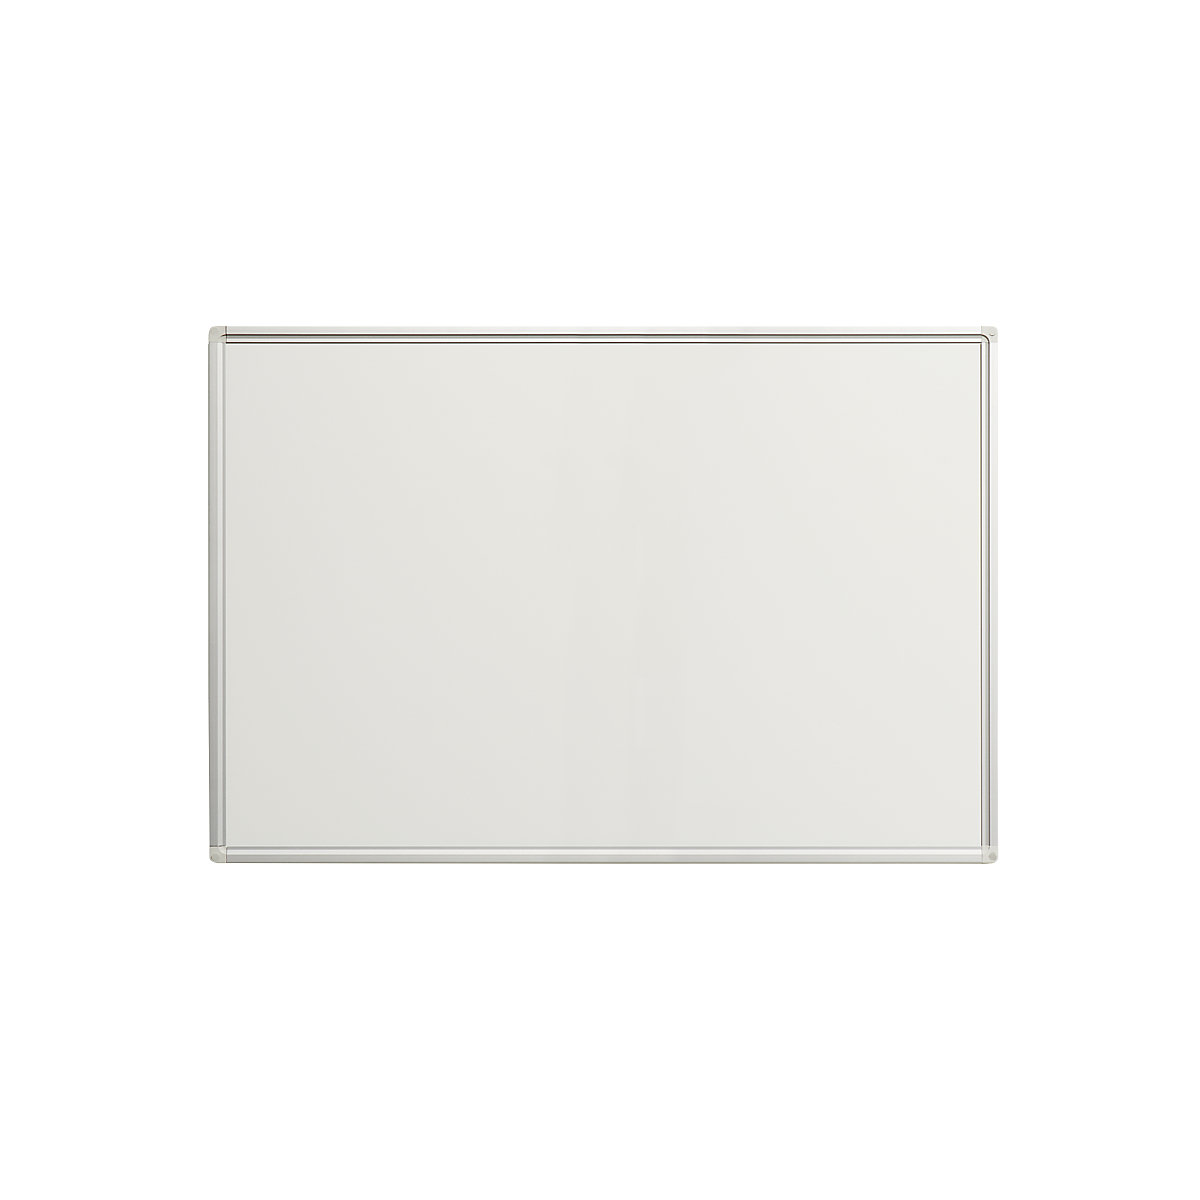 Pizarra blanca Economy – eurokraft pro, chapa de acero pintada, A x H 900 x 600 mm-13